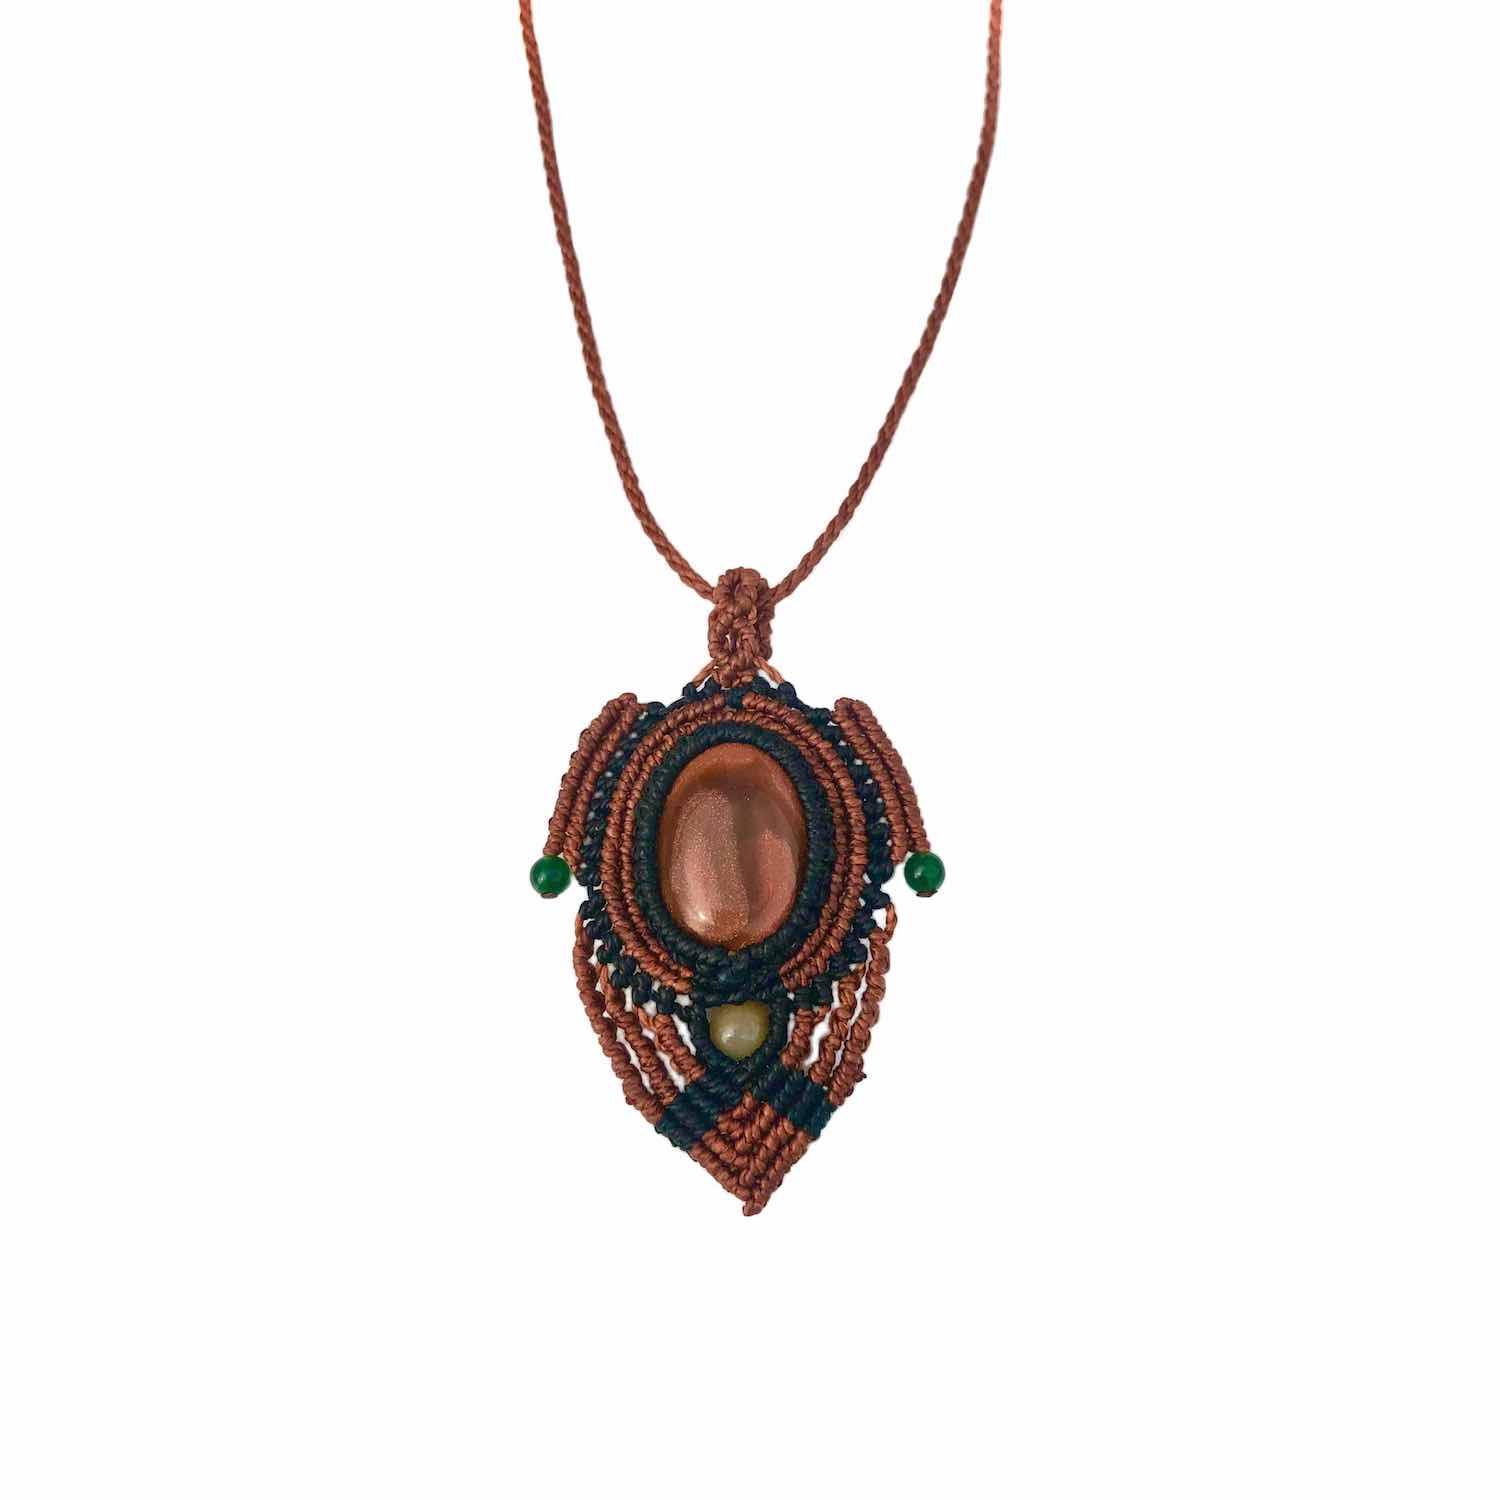 Goldstone Pendant Necklace in Micro Macrame by Designer Coco Paniora Salinas of RUMI SUMAQ - Bohemian Beach Jewelry Handcrafted on Martha's Vineyard